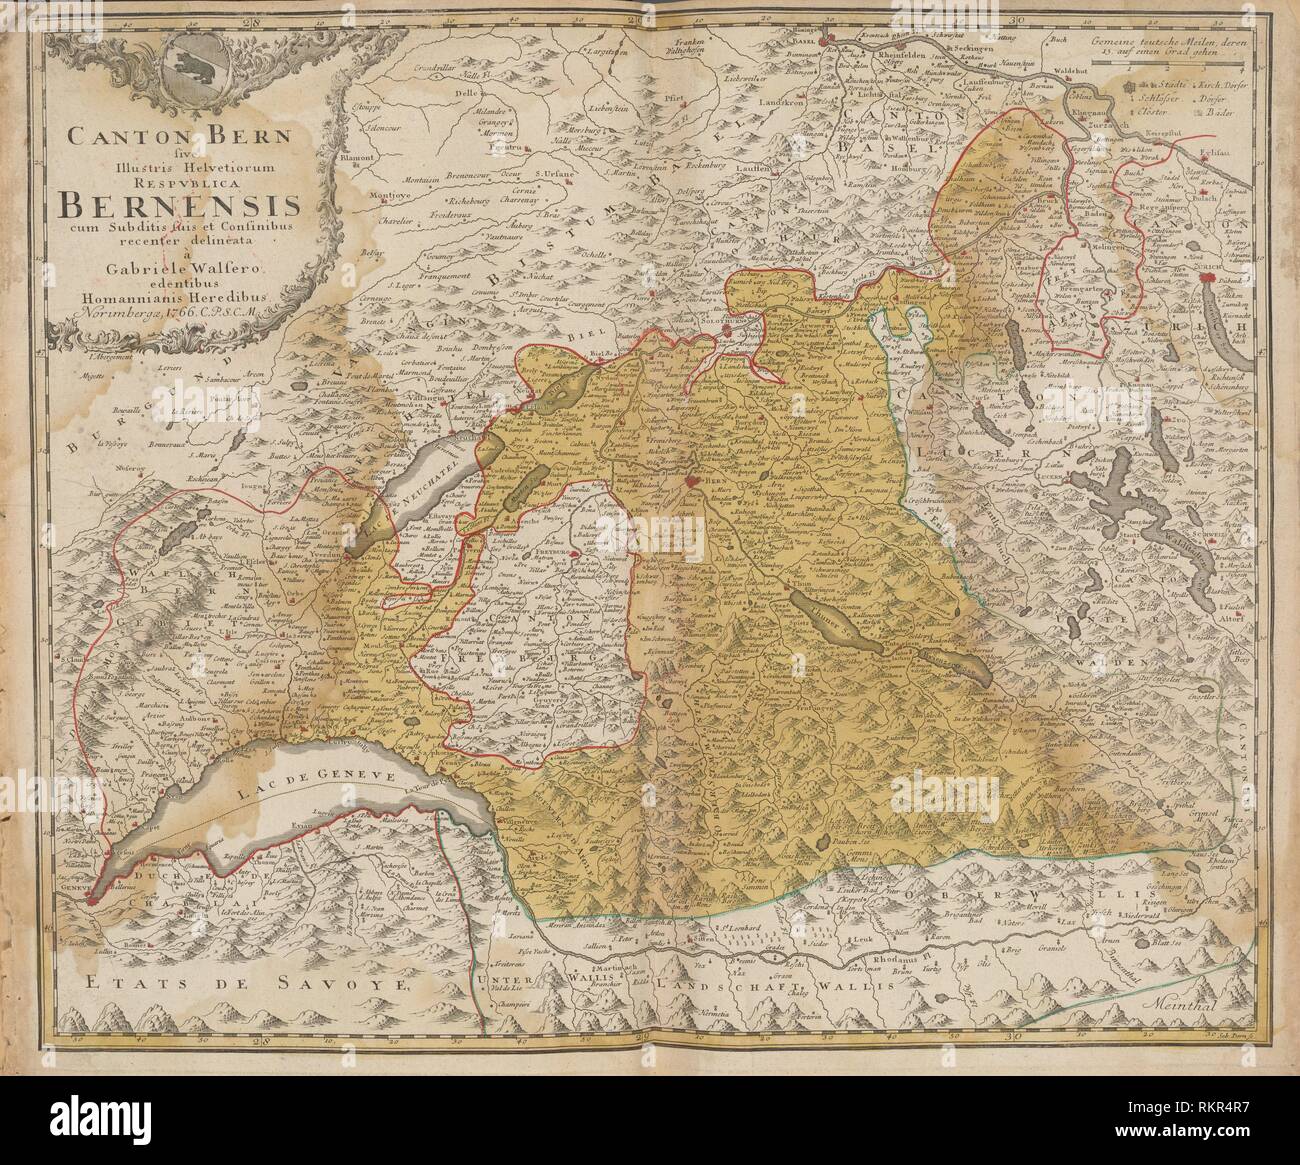 Canton Bern sive illustris Helvetiorum respublica Bernensis,. Homann, Johann Baptist, 1663-1724 (Cartographer). Atlases, gazetteers, guidebooks and Stock Photo